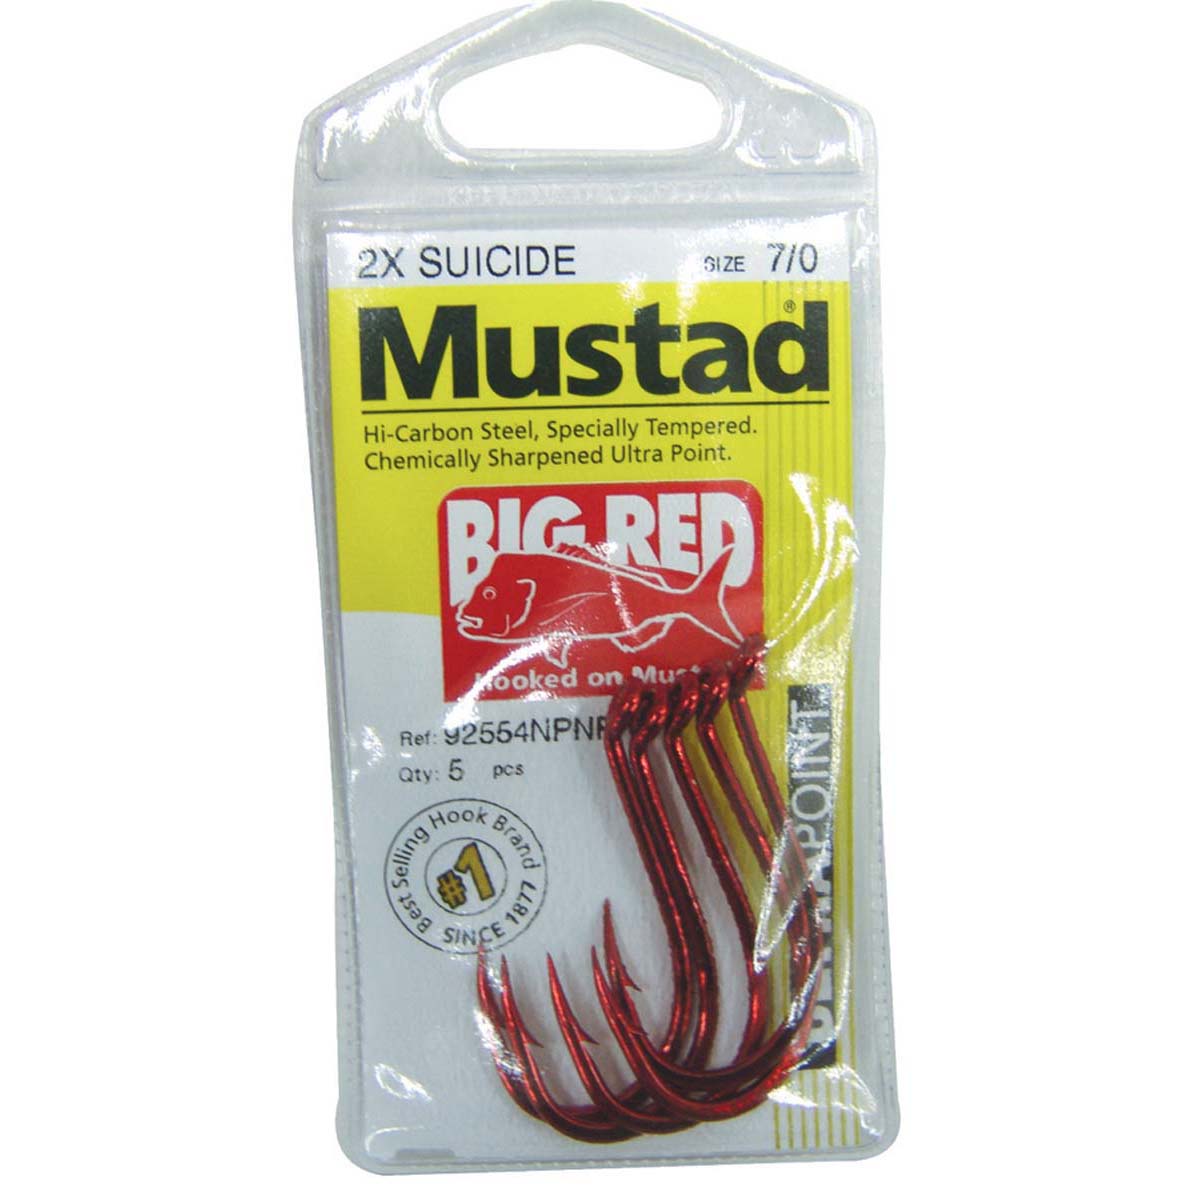 Mustad Big Red Suicide Hooks 3 / 0 8 Pack